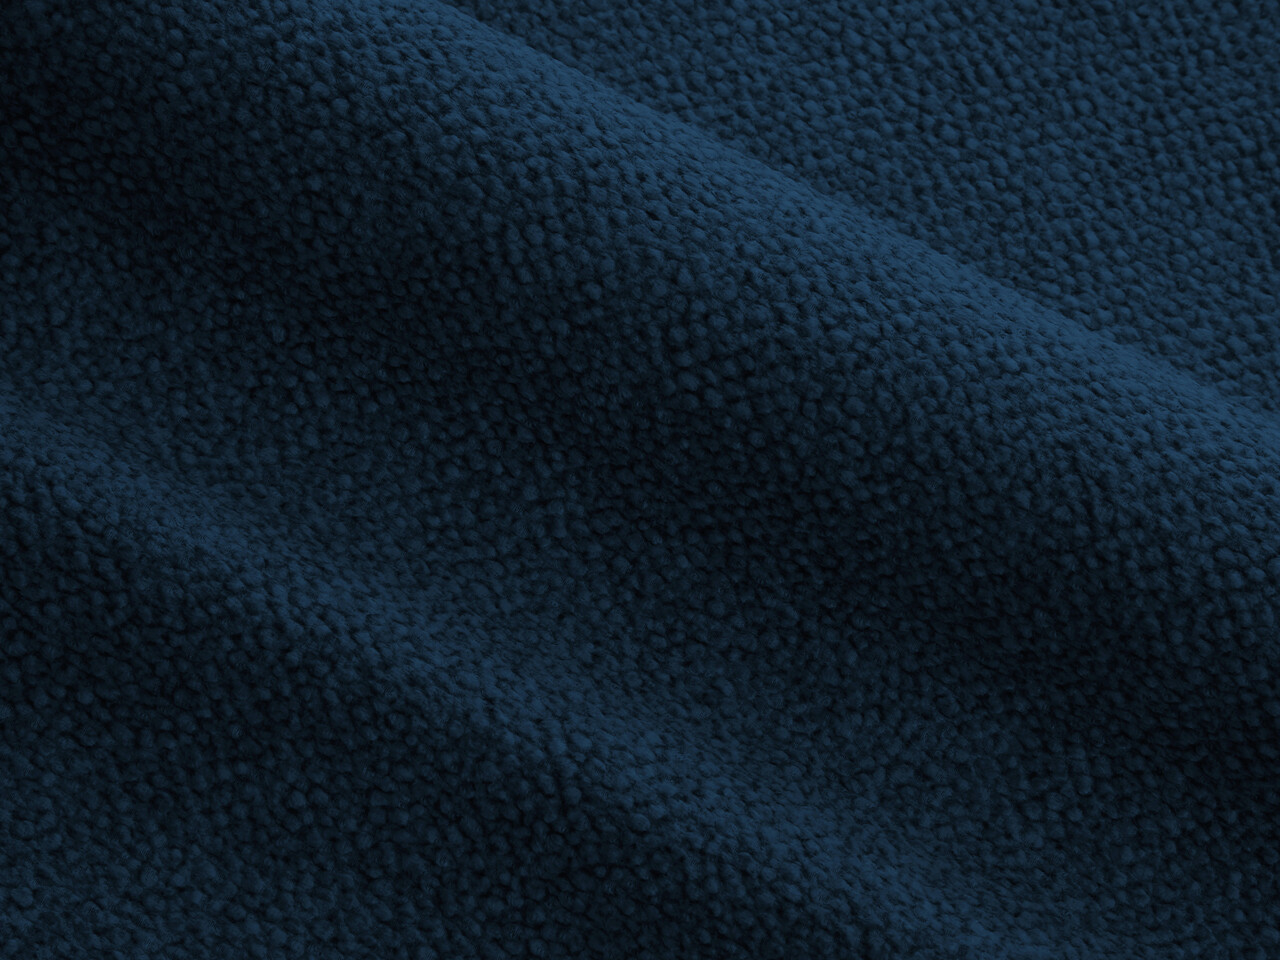 Coltar stanga 4 locuri, Mackay, Cosmopolitan Design, 282x166x73 cm, catifea tricotata, albastru inchis